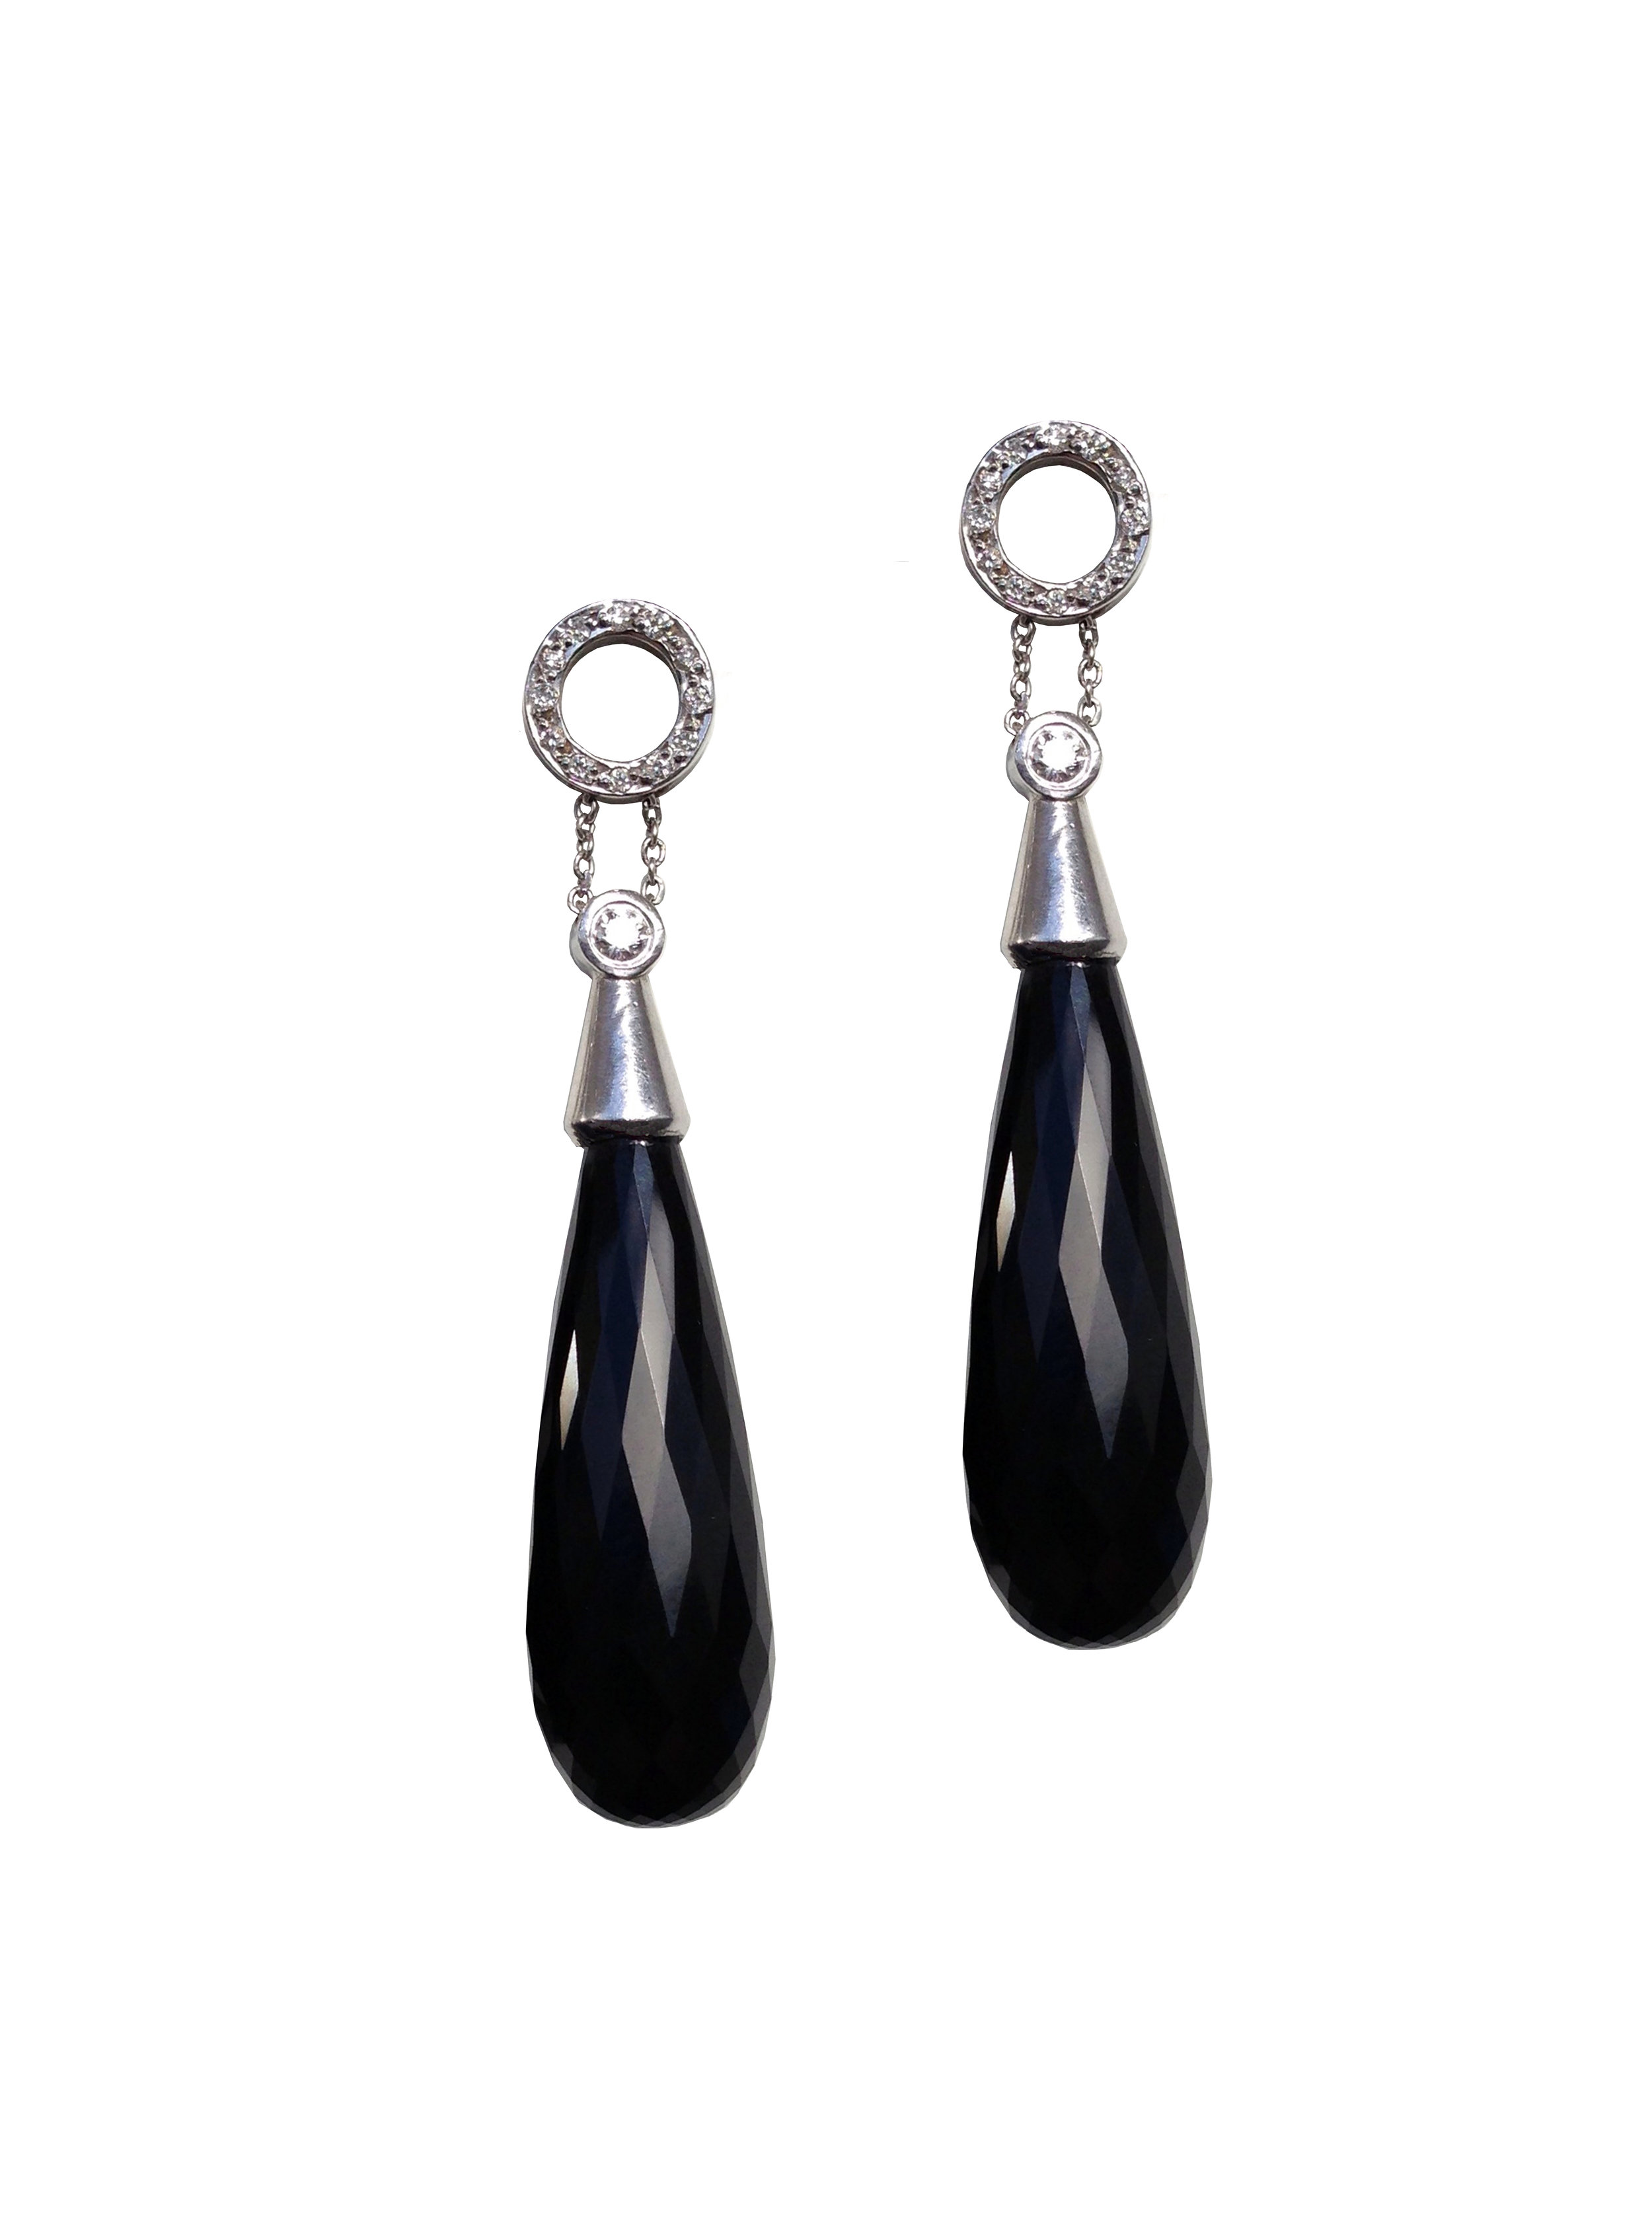 Black Onyx and Diamond Earrings in 18ct White Gold copy.jpg